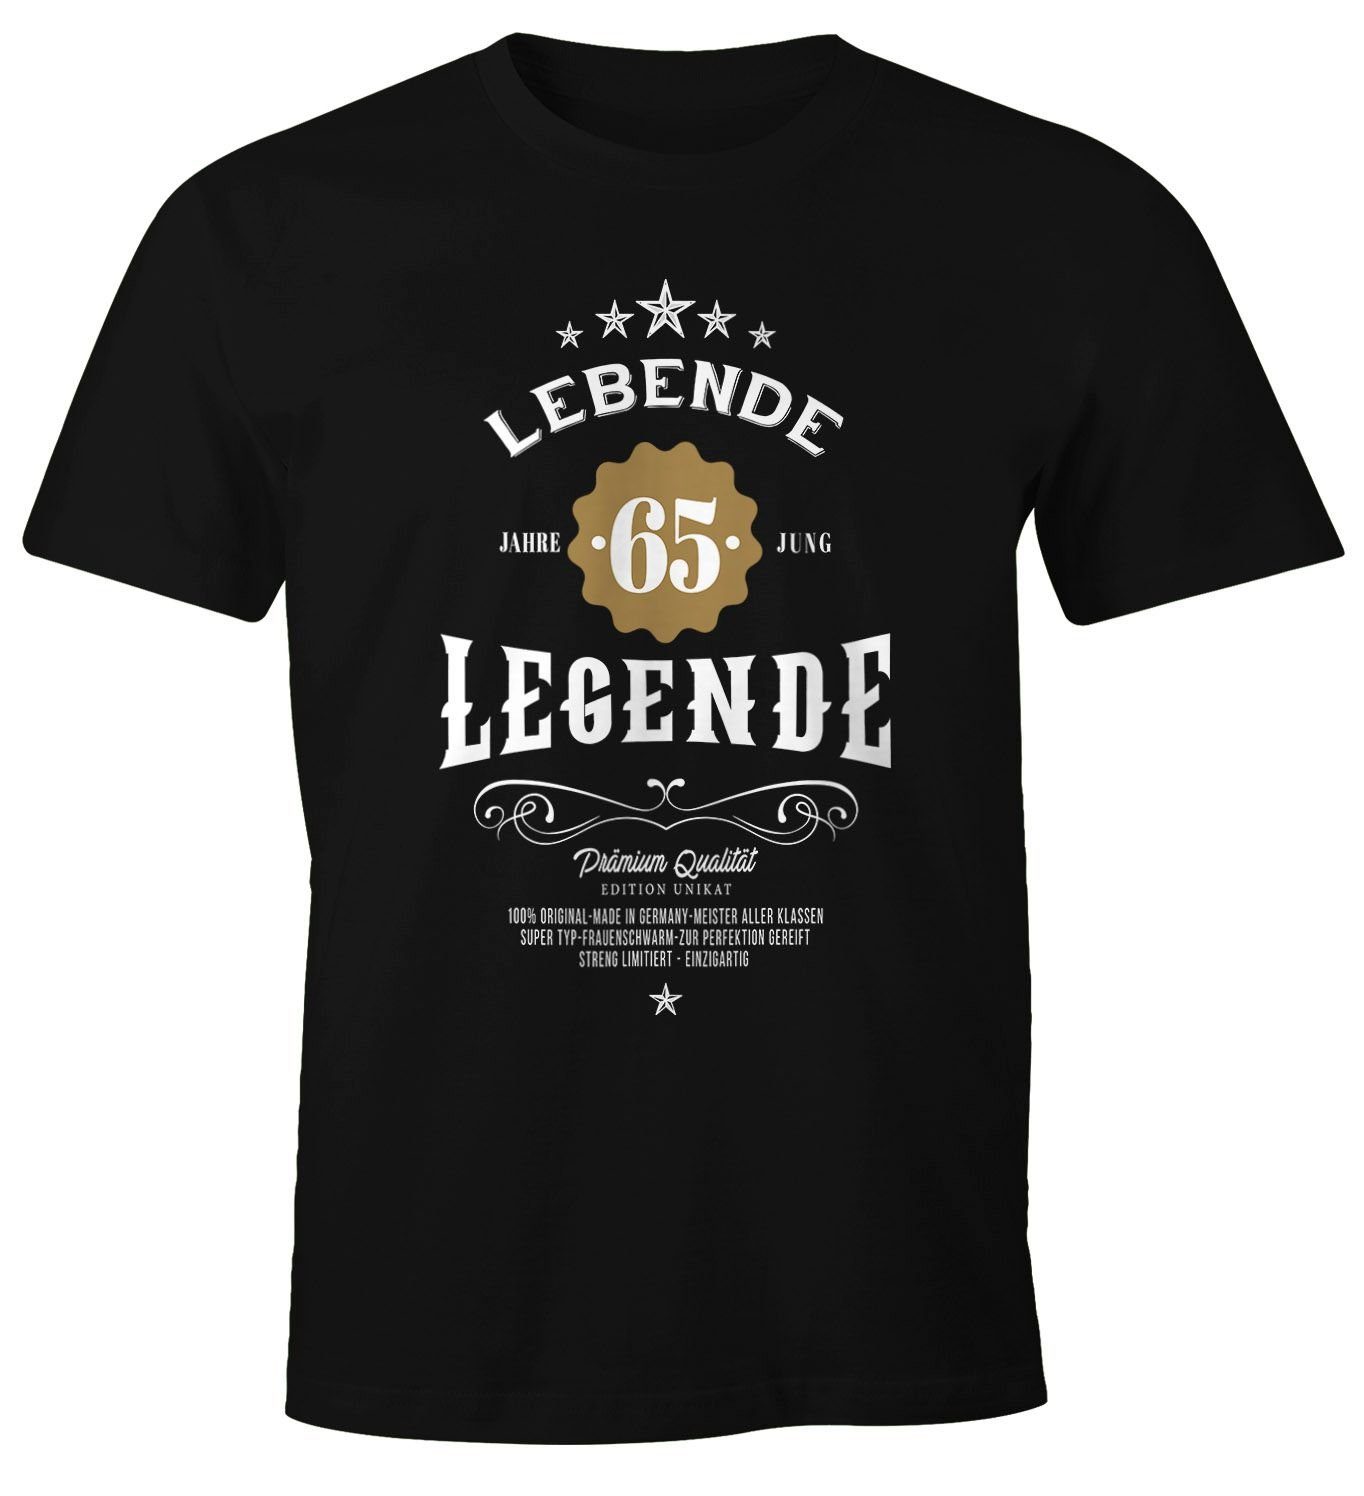 MoonWorks Print-Shirt Herren T-Shirt Geburtstag Geschenk Lebende Legende 30-80 Jahre jung Moonworks® mit Print 65 schwarz